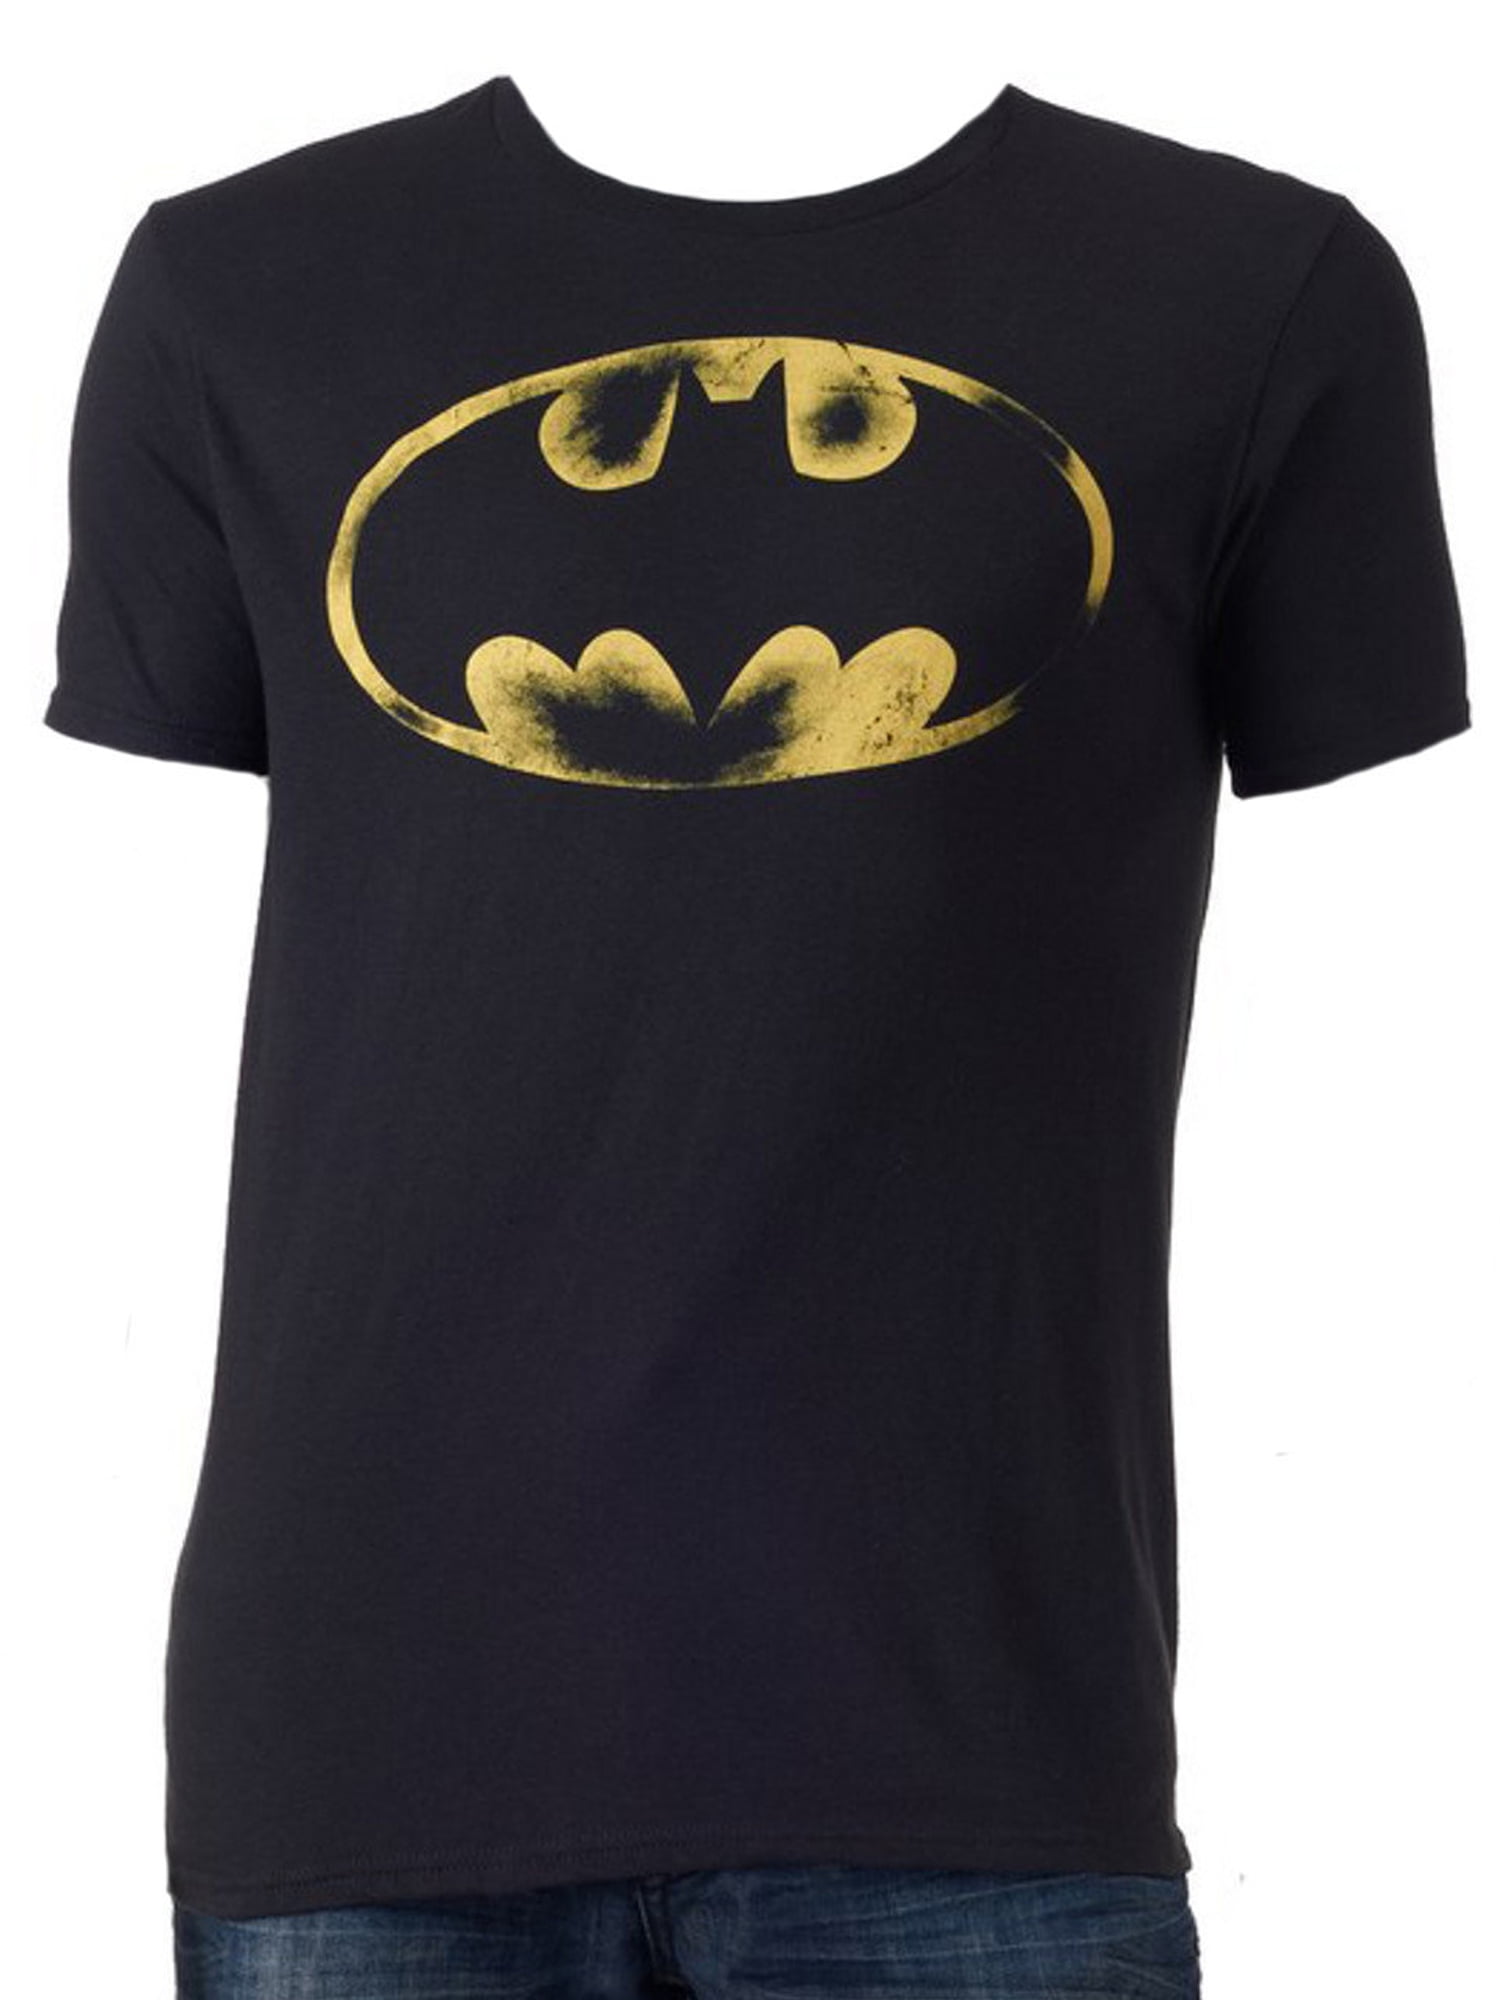 Boys Black Batman Fancy Dress Superhero T-Shirt Short Sleeve Top Age 2-8 years 